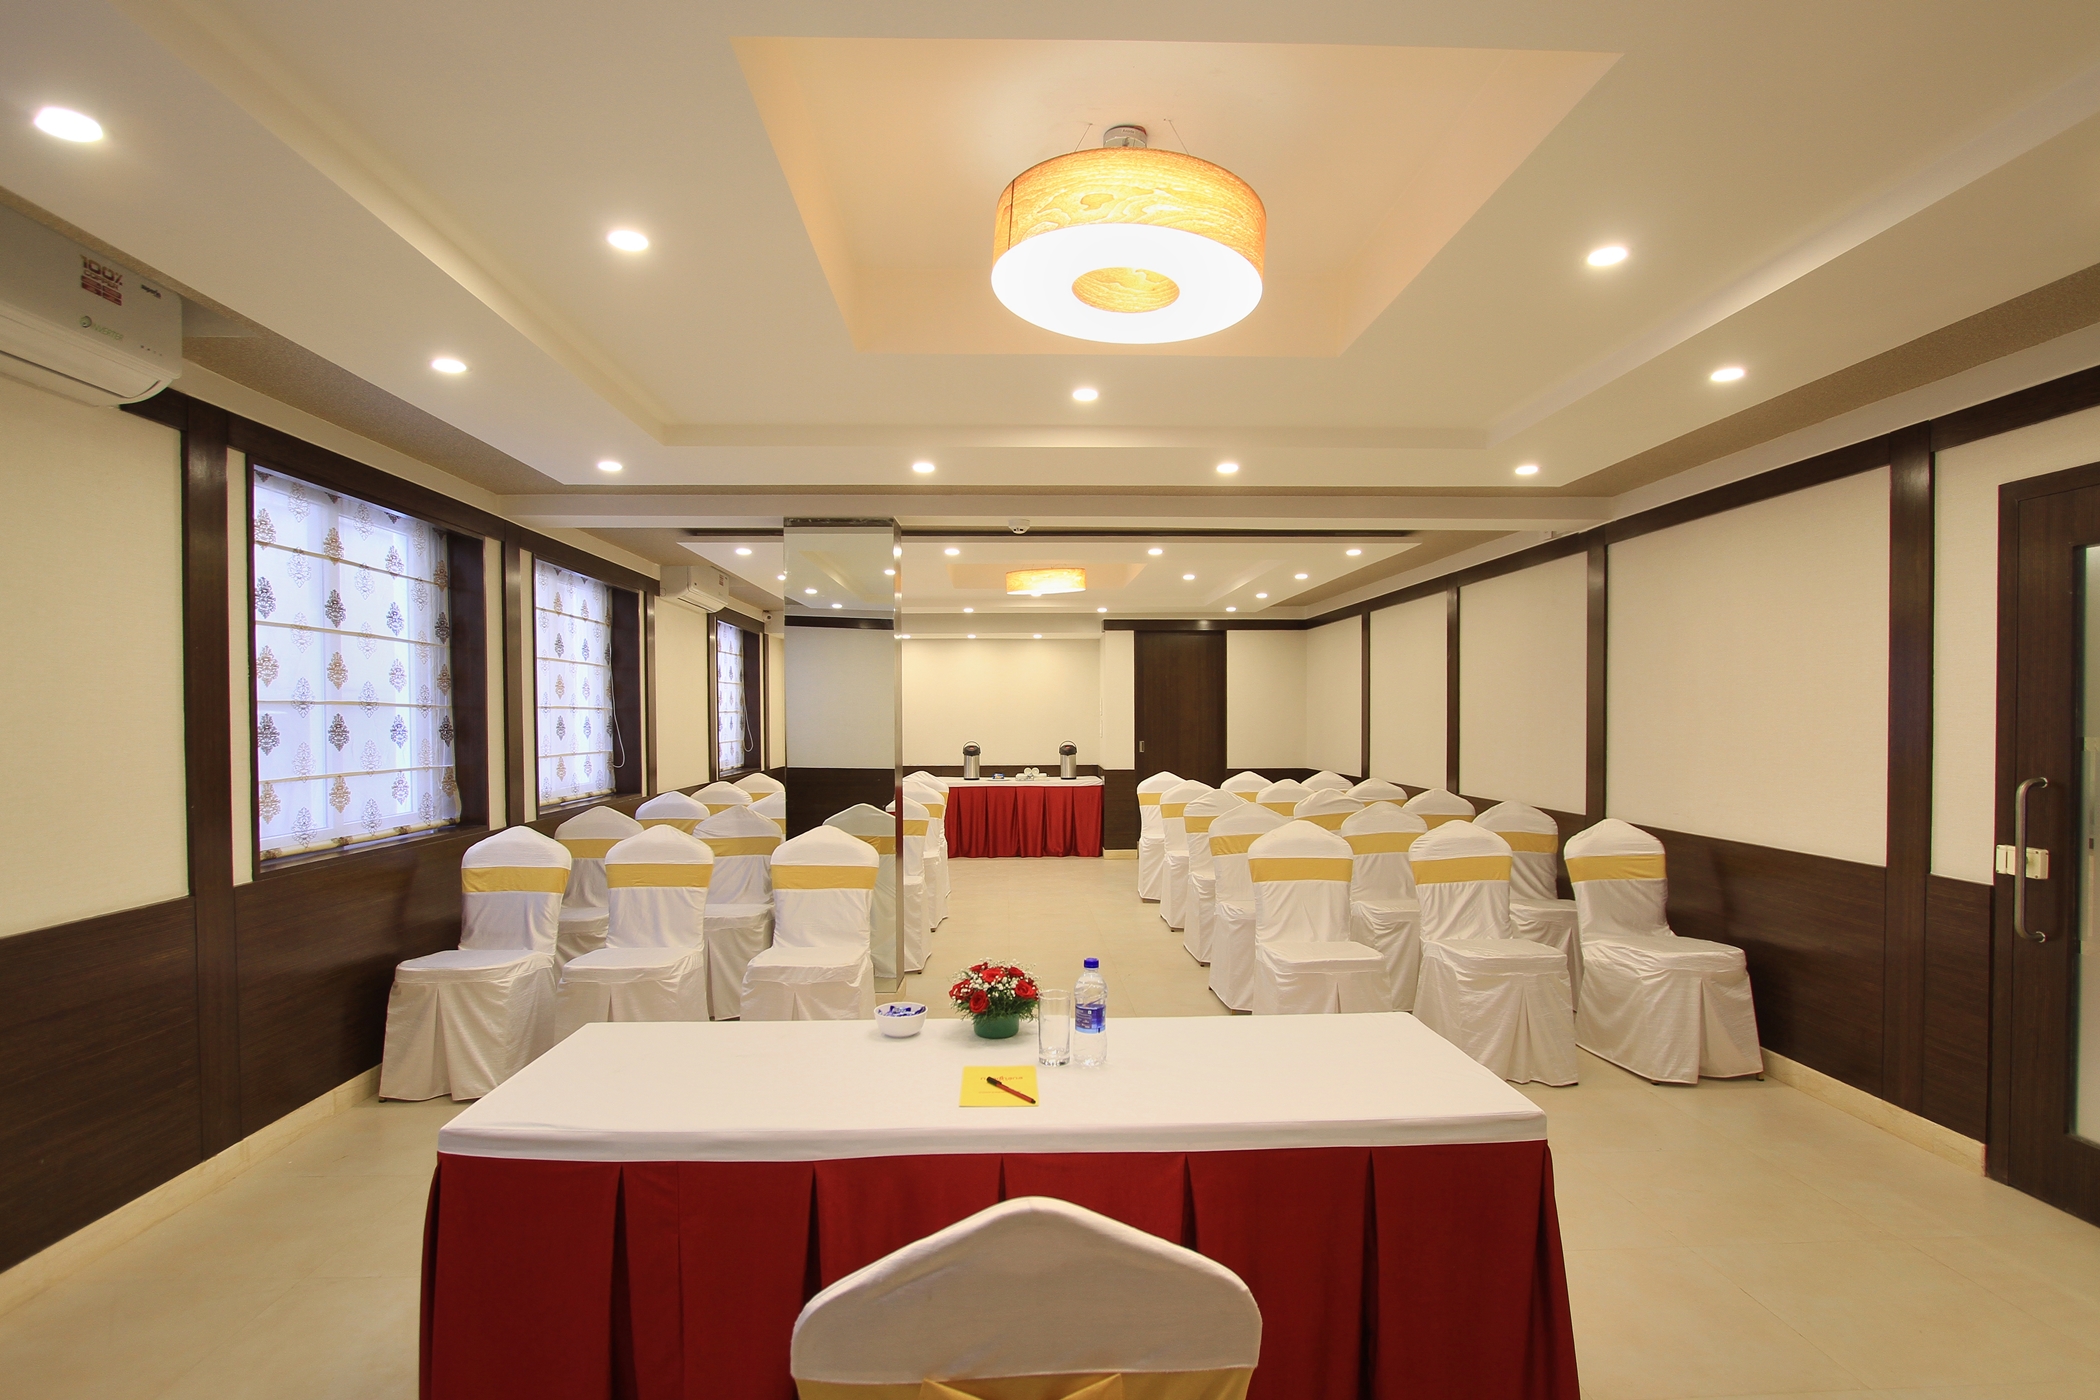 EXTERIOR, budget hotel in bangalore, La Sara Regent Hotel, Koramangala,  2  3 1